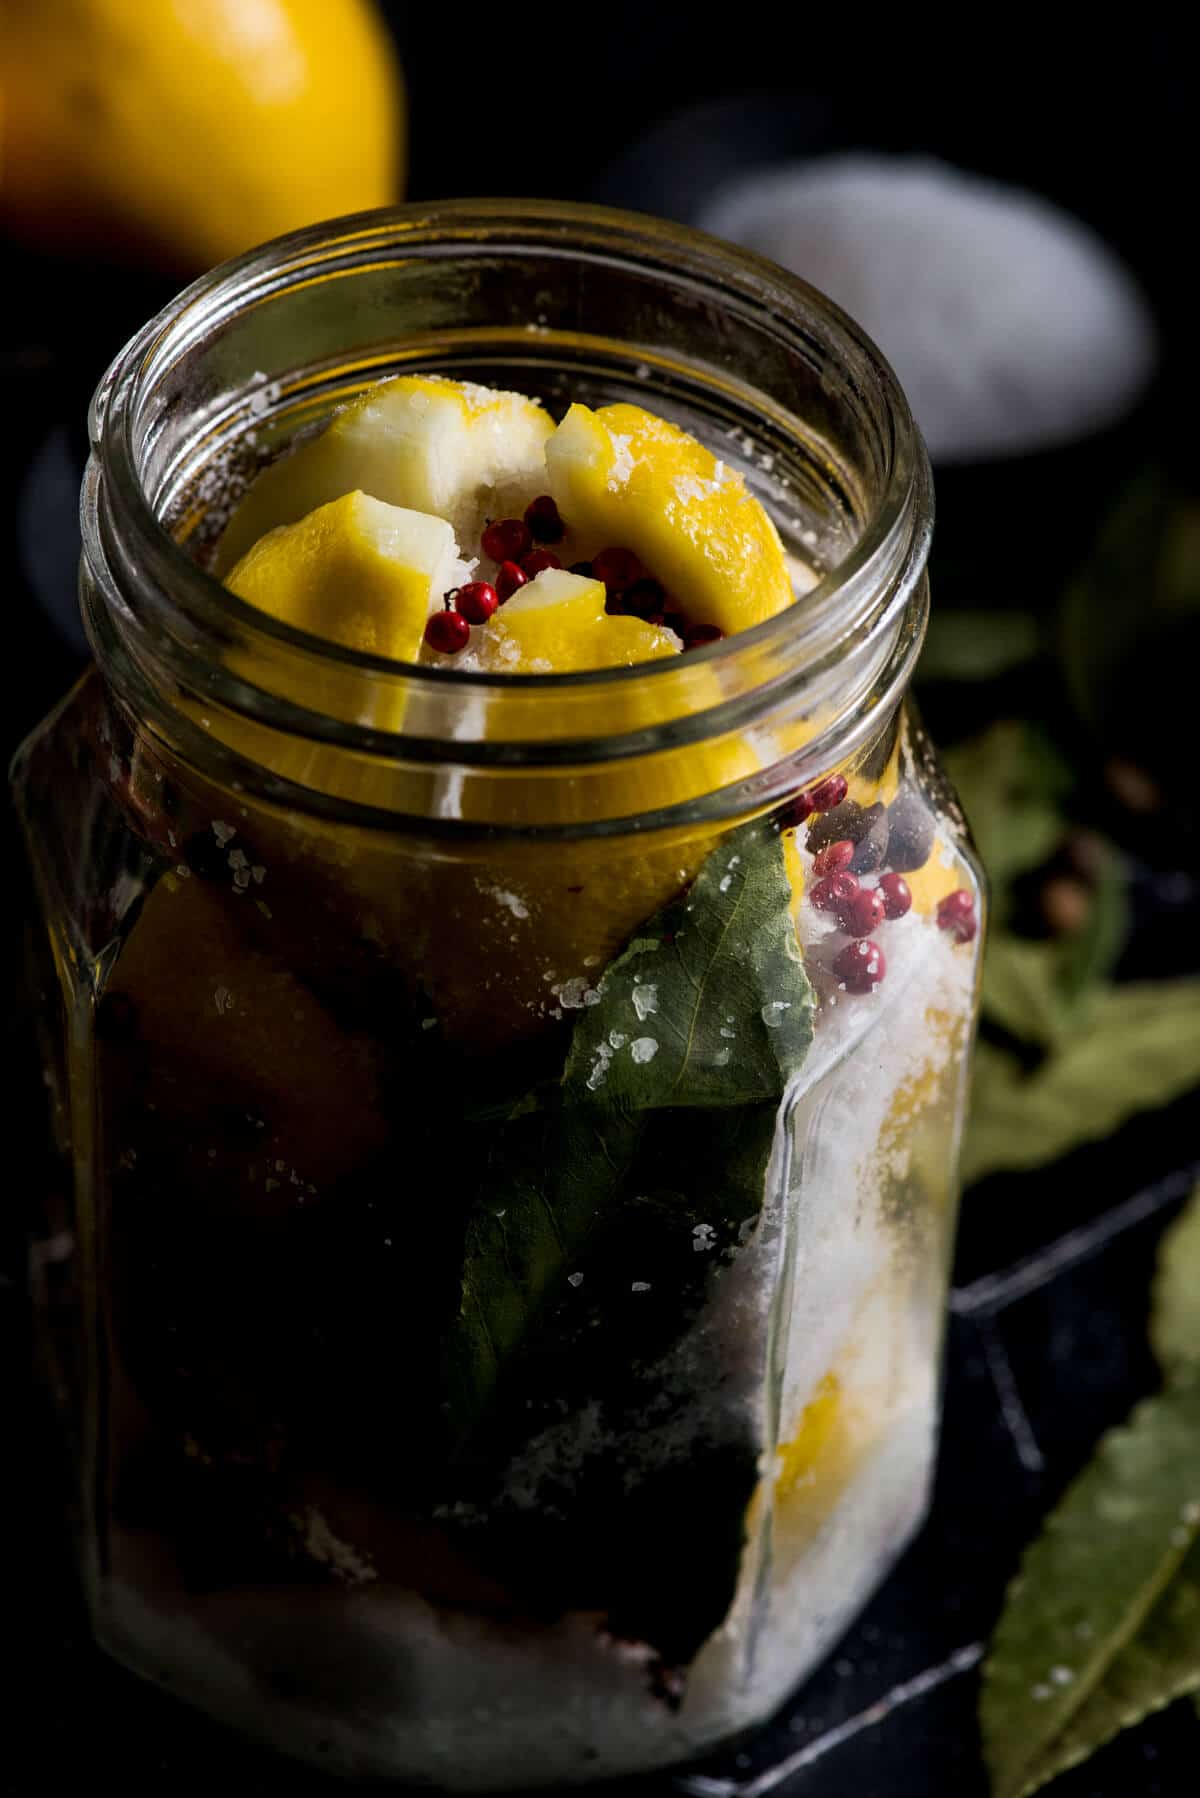 Lemons in Jar with salt bay leaves and peppercorns